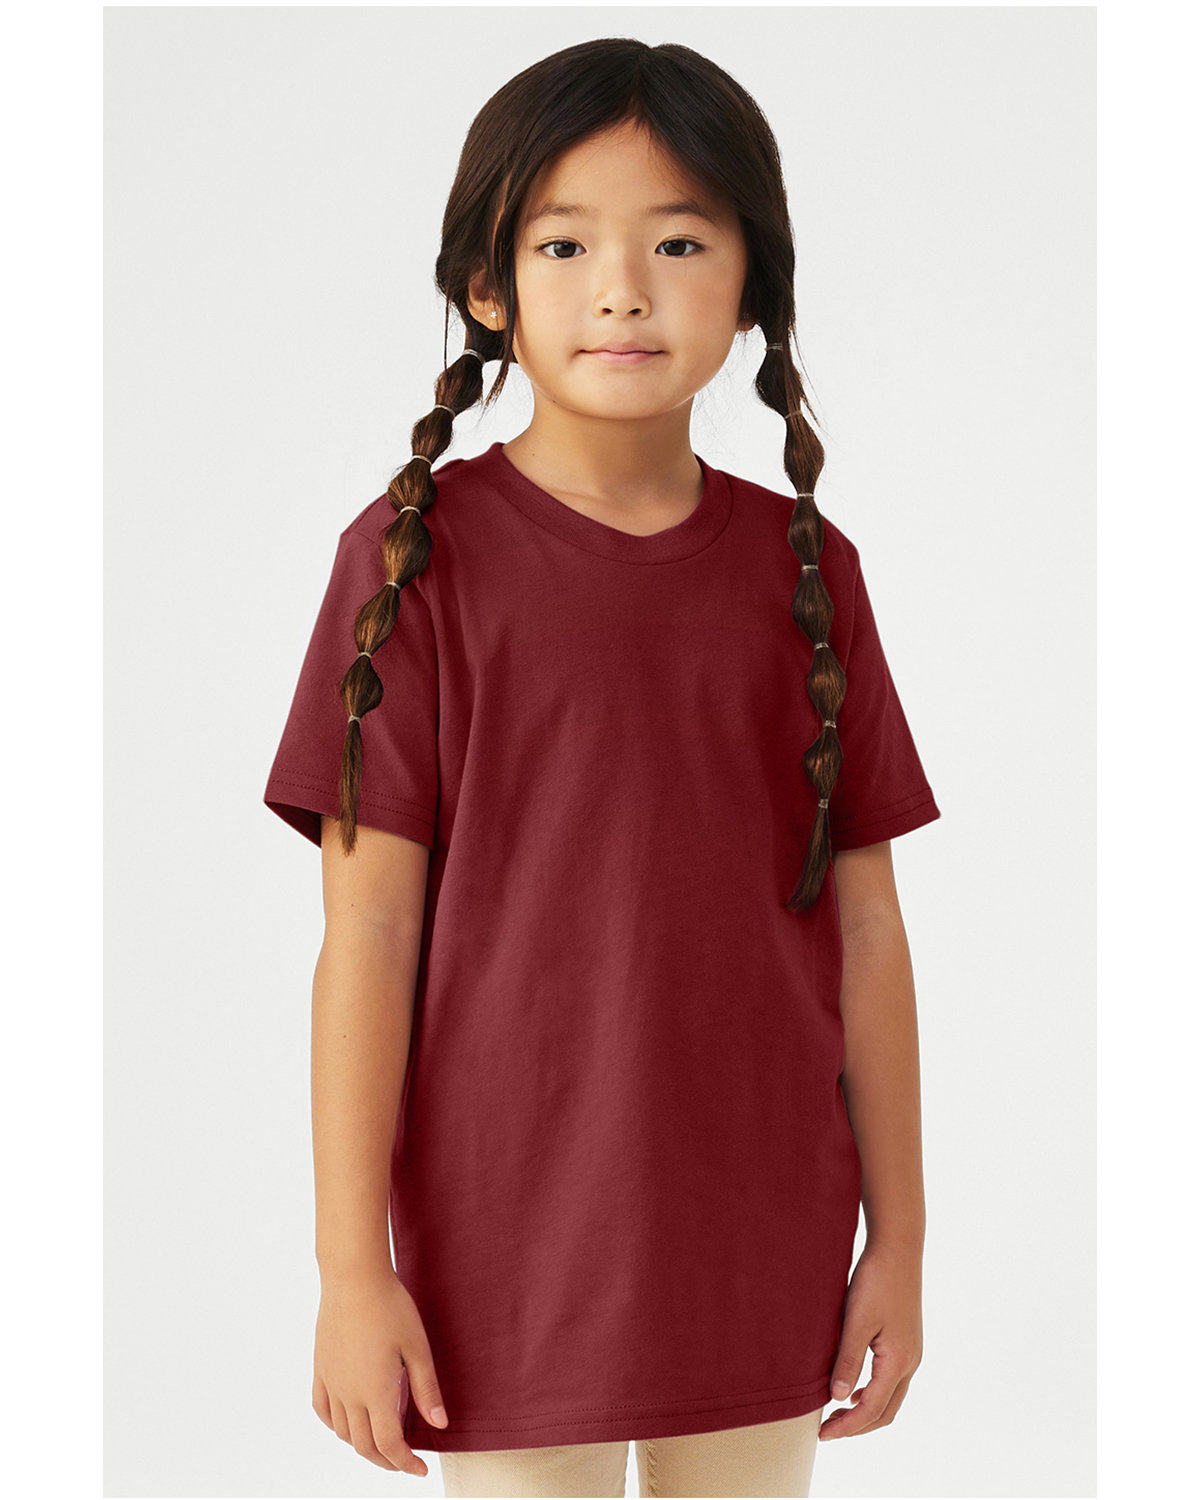 Bella + Canvas Youth Jersey T-Shirt cardinal 